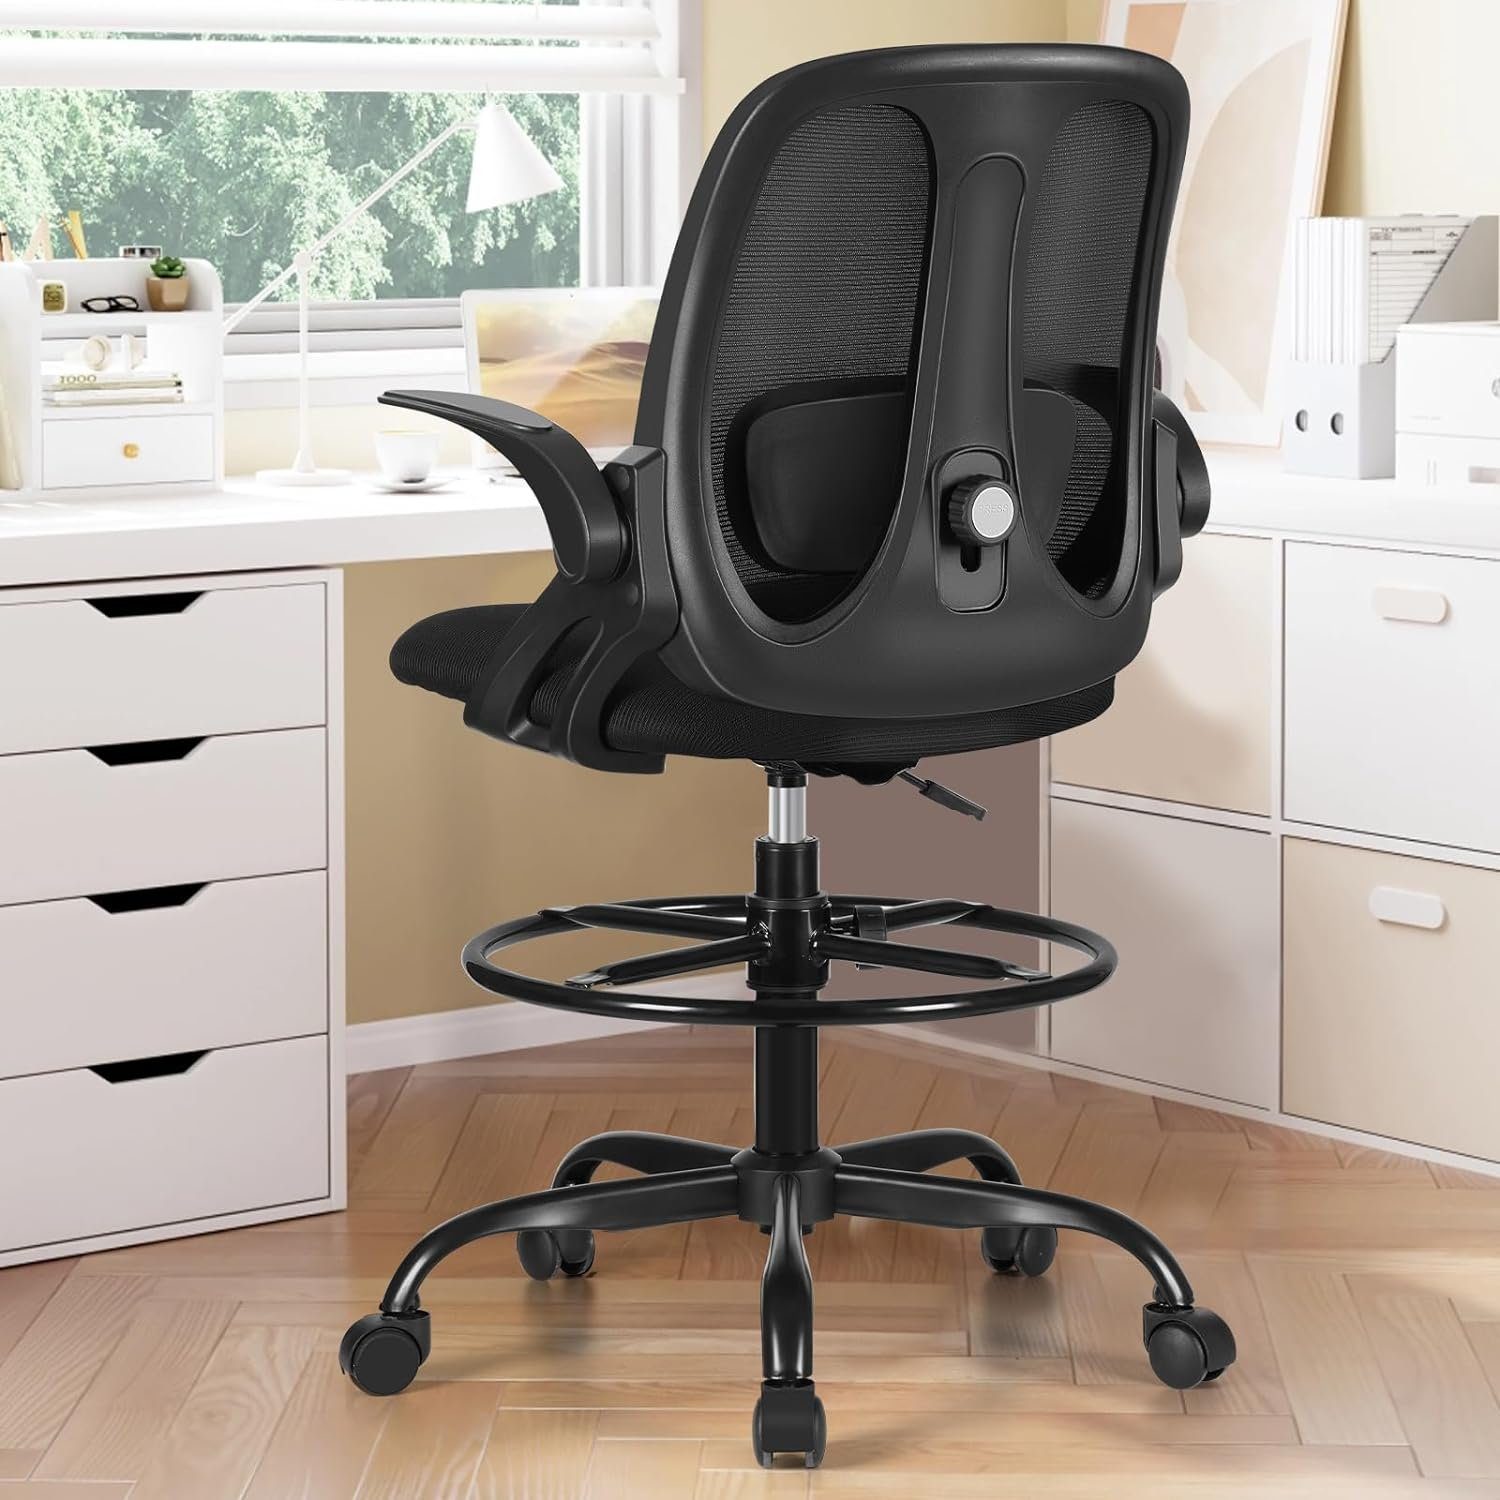 Razzor Bürostuhl (Bürostuhl ergonomisch: Schreibtischstuhl mit verstellbarem Sitz), Bürostuhl, Schreibtischstuhl Ergonomisch mit Hochklappbaren Armlehnen